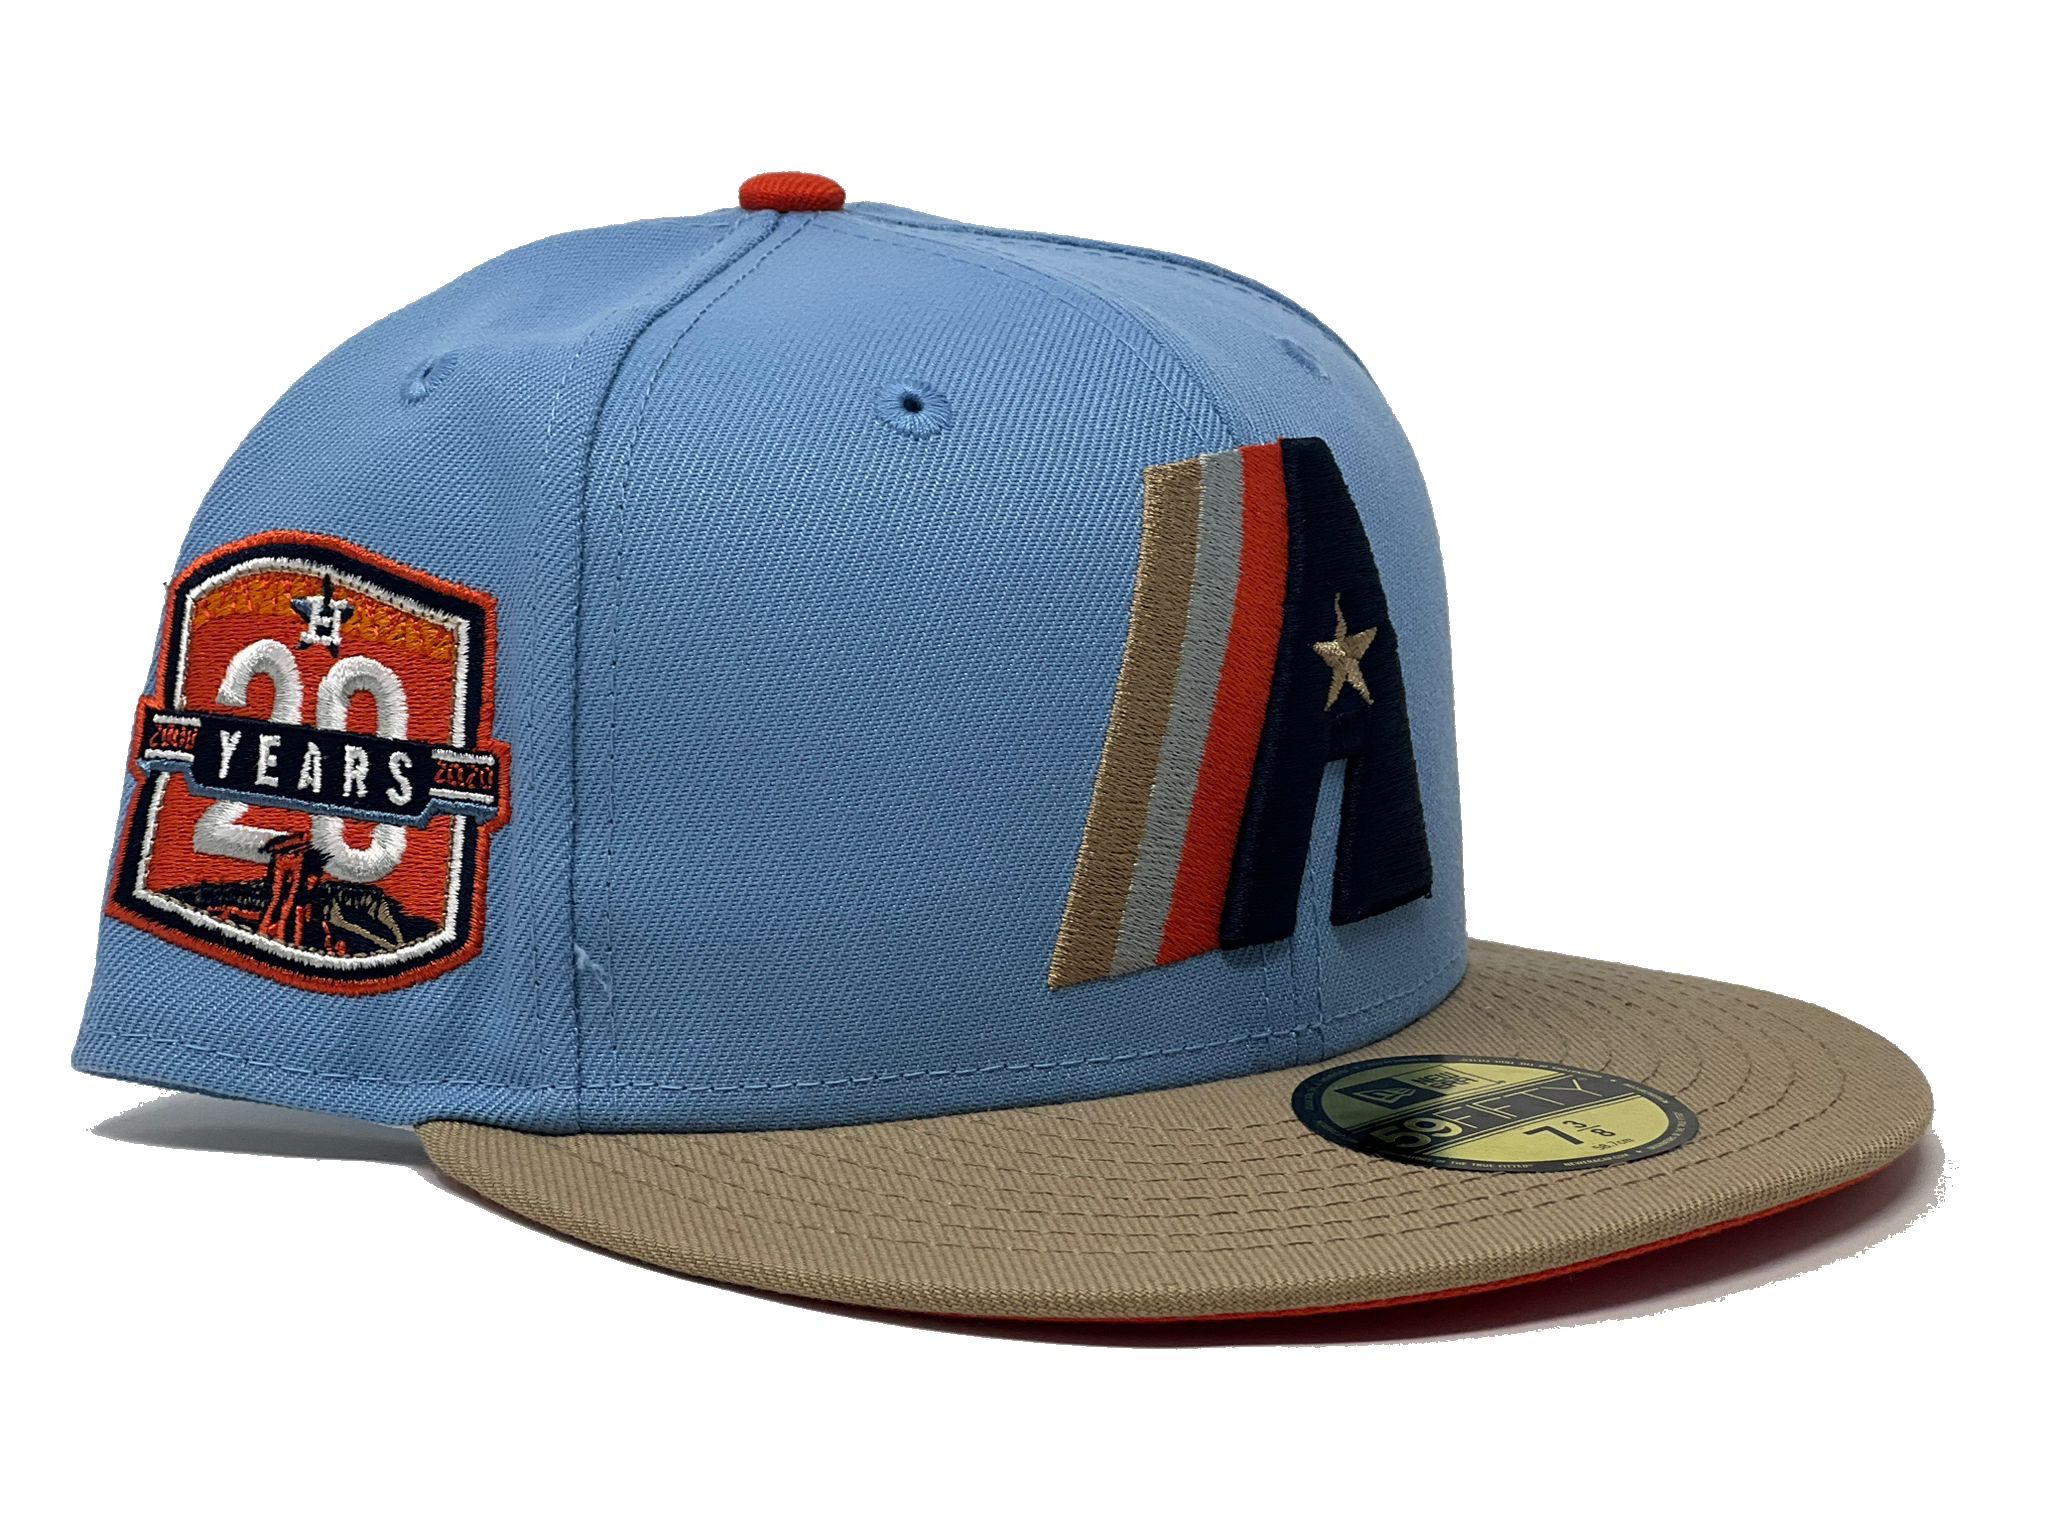 martodesigns - Houston Astros Baseball Glitter Blue Orange – Designtwists